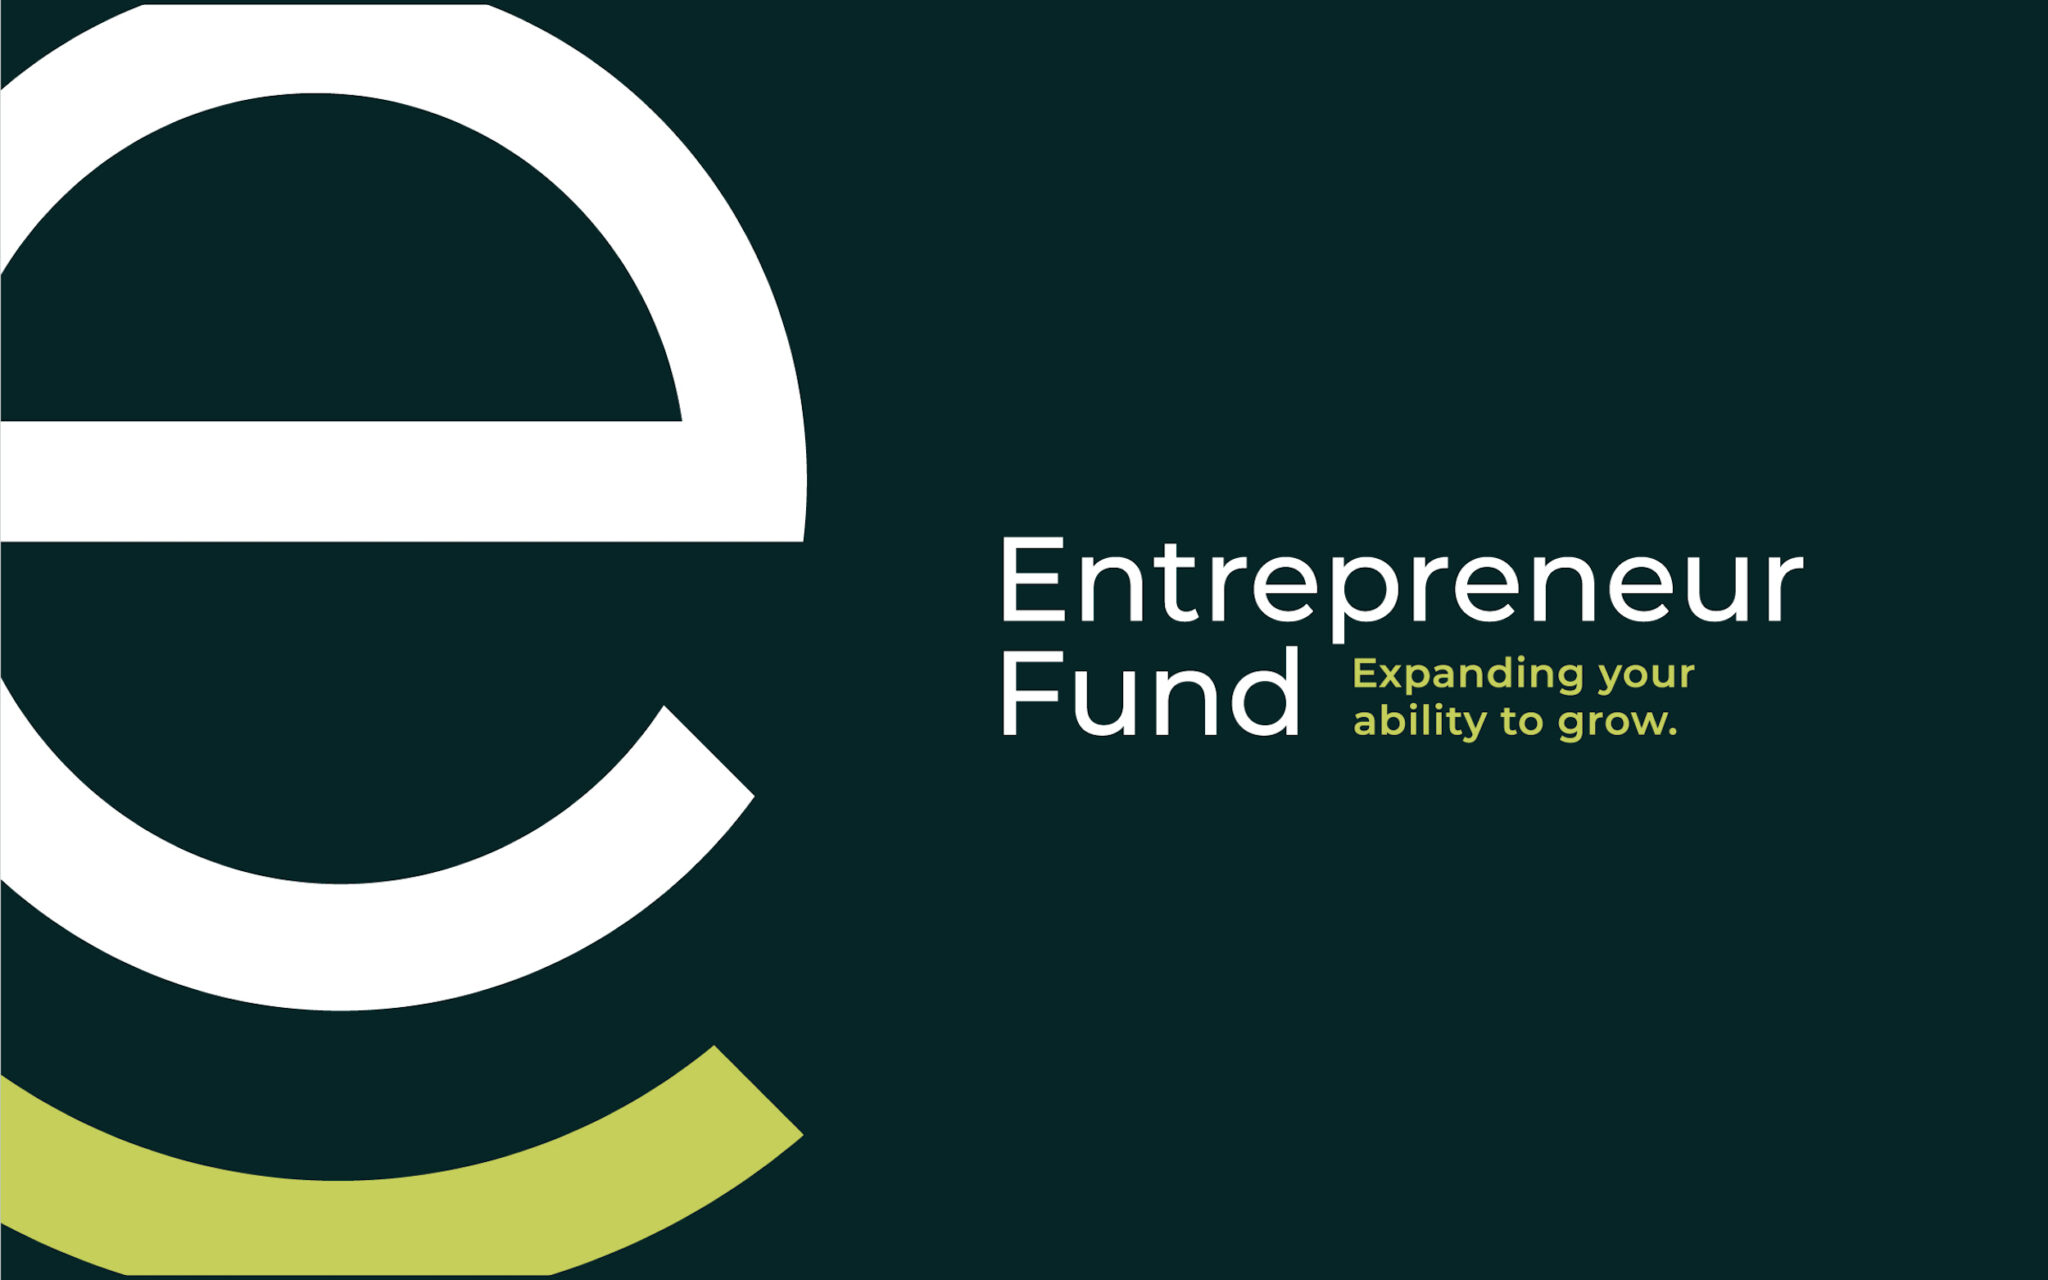 Entrepreneur Fund logo brand refresh, created by Šek Design Studio